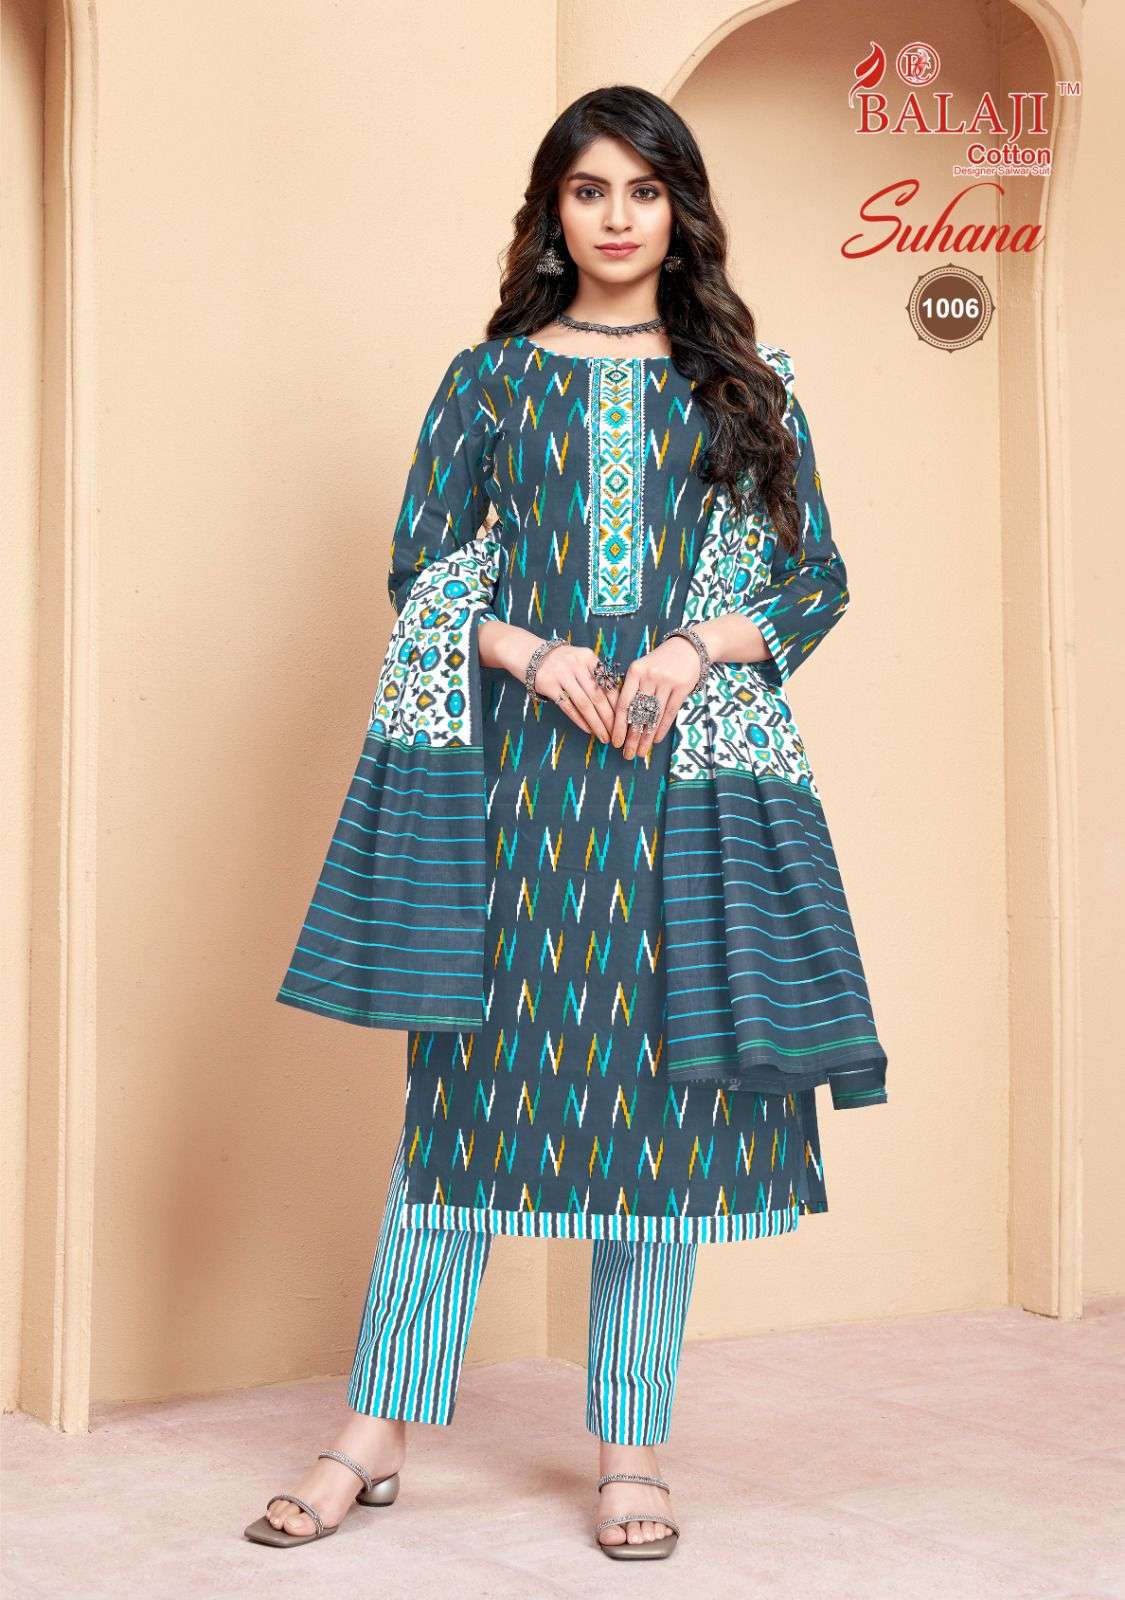 balaji cotton suhana material 1001-1008 series latest designer cotton salwar kameez wholesaler surat gujarat